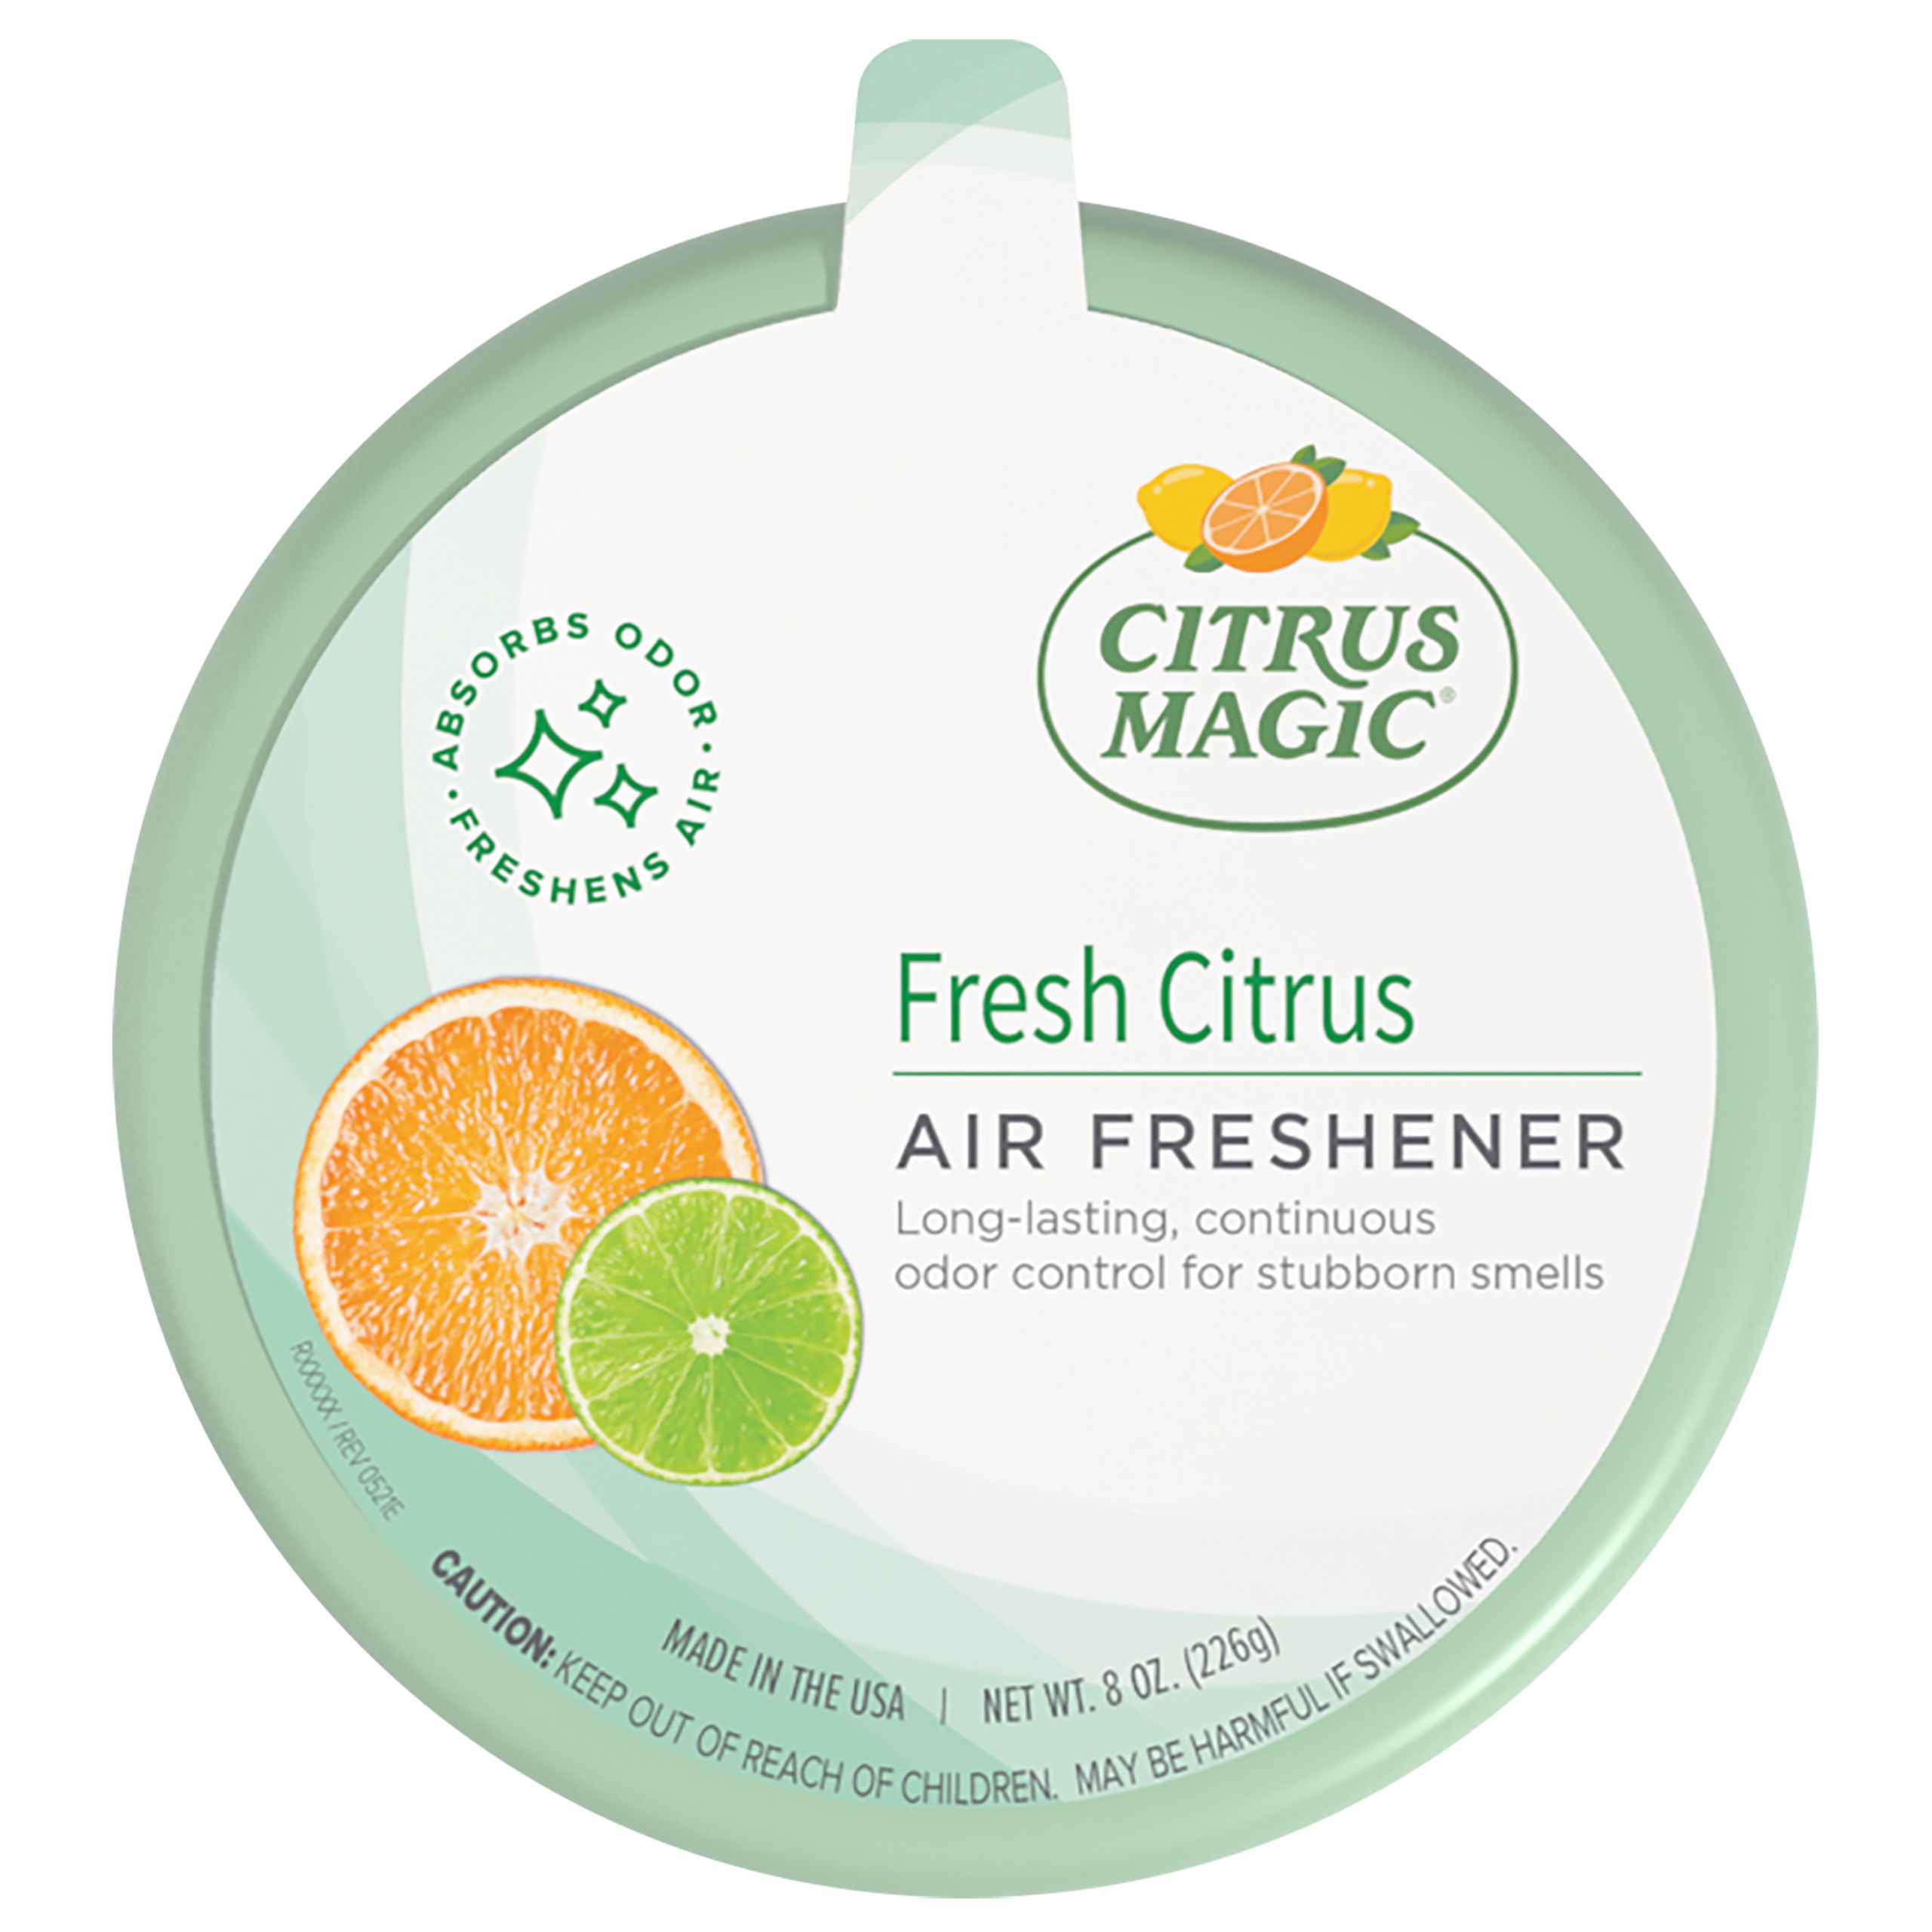 https://www.citrusmagic.com/wp-content/uploads/2020/11/citrus-magic-solid-fresh-citrus-web.jpg